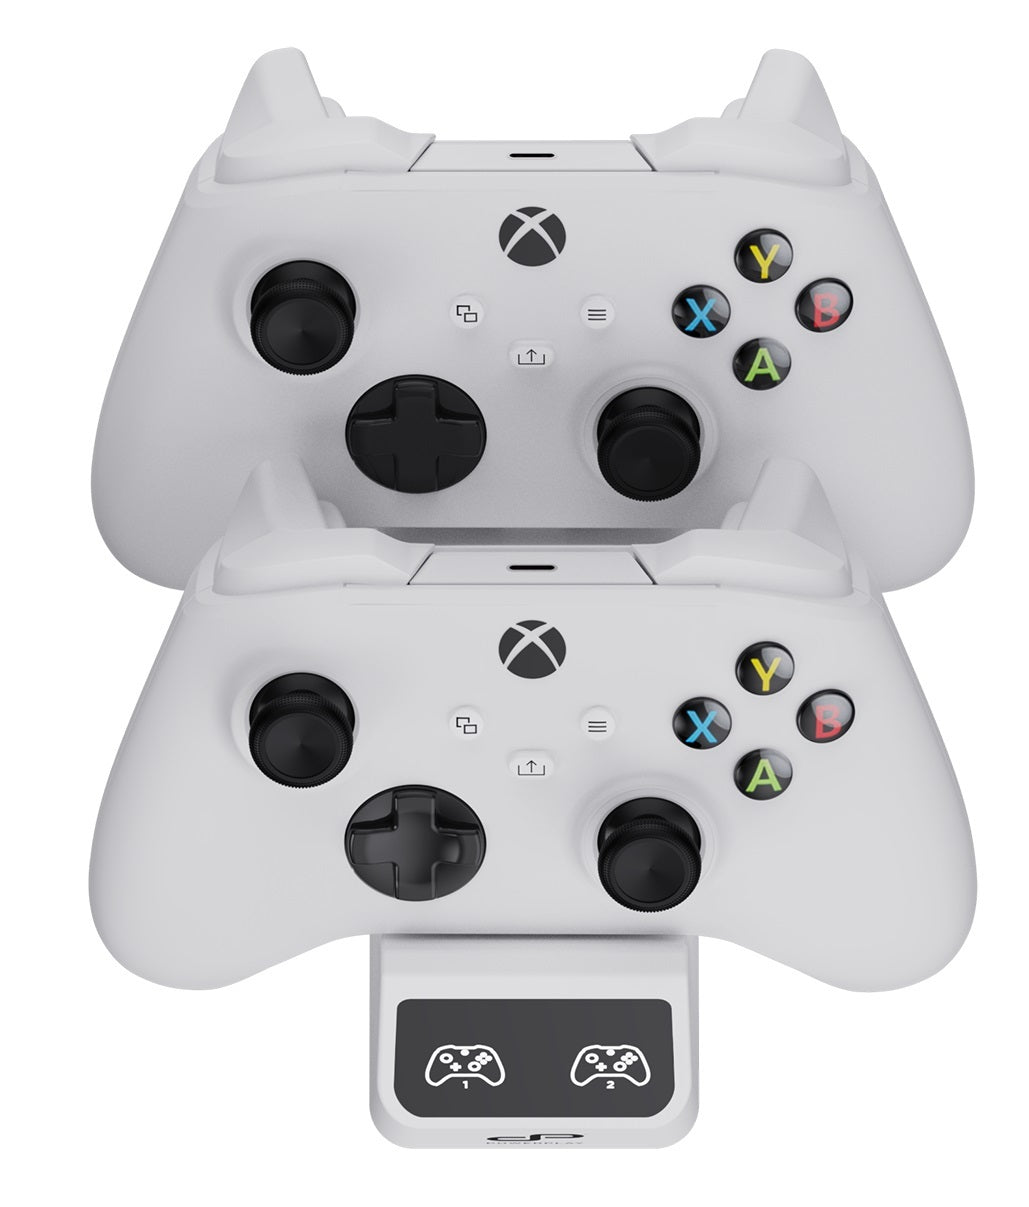 PowerPlay Xbox Dual Charge Station (White) - Xbox Series X